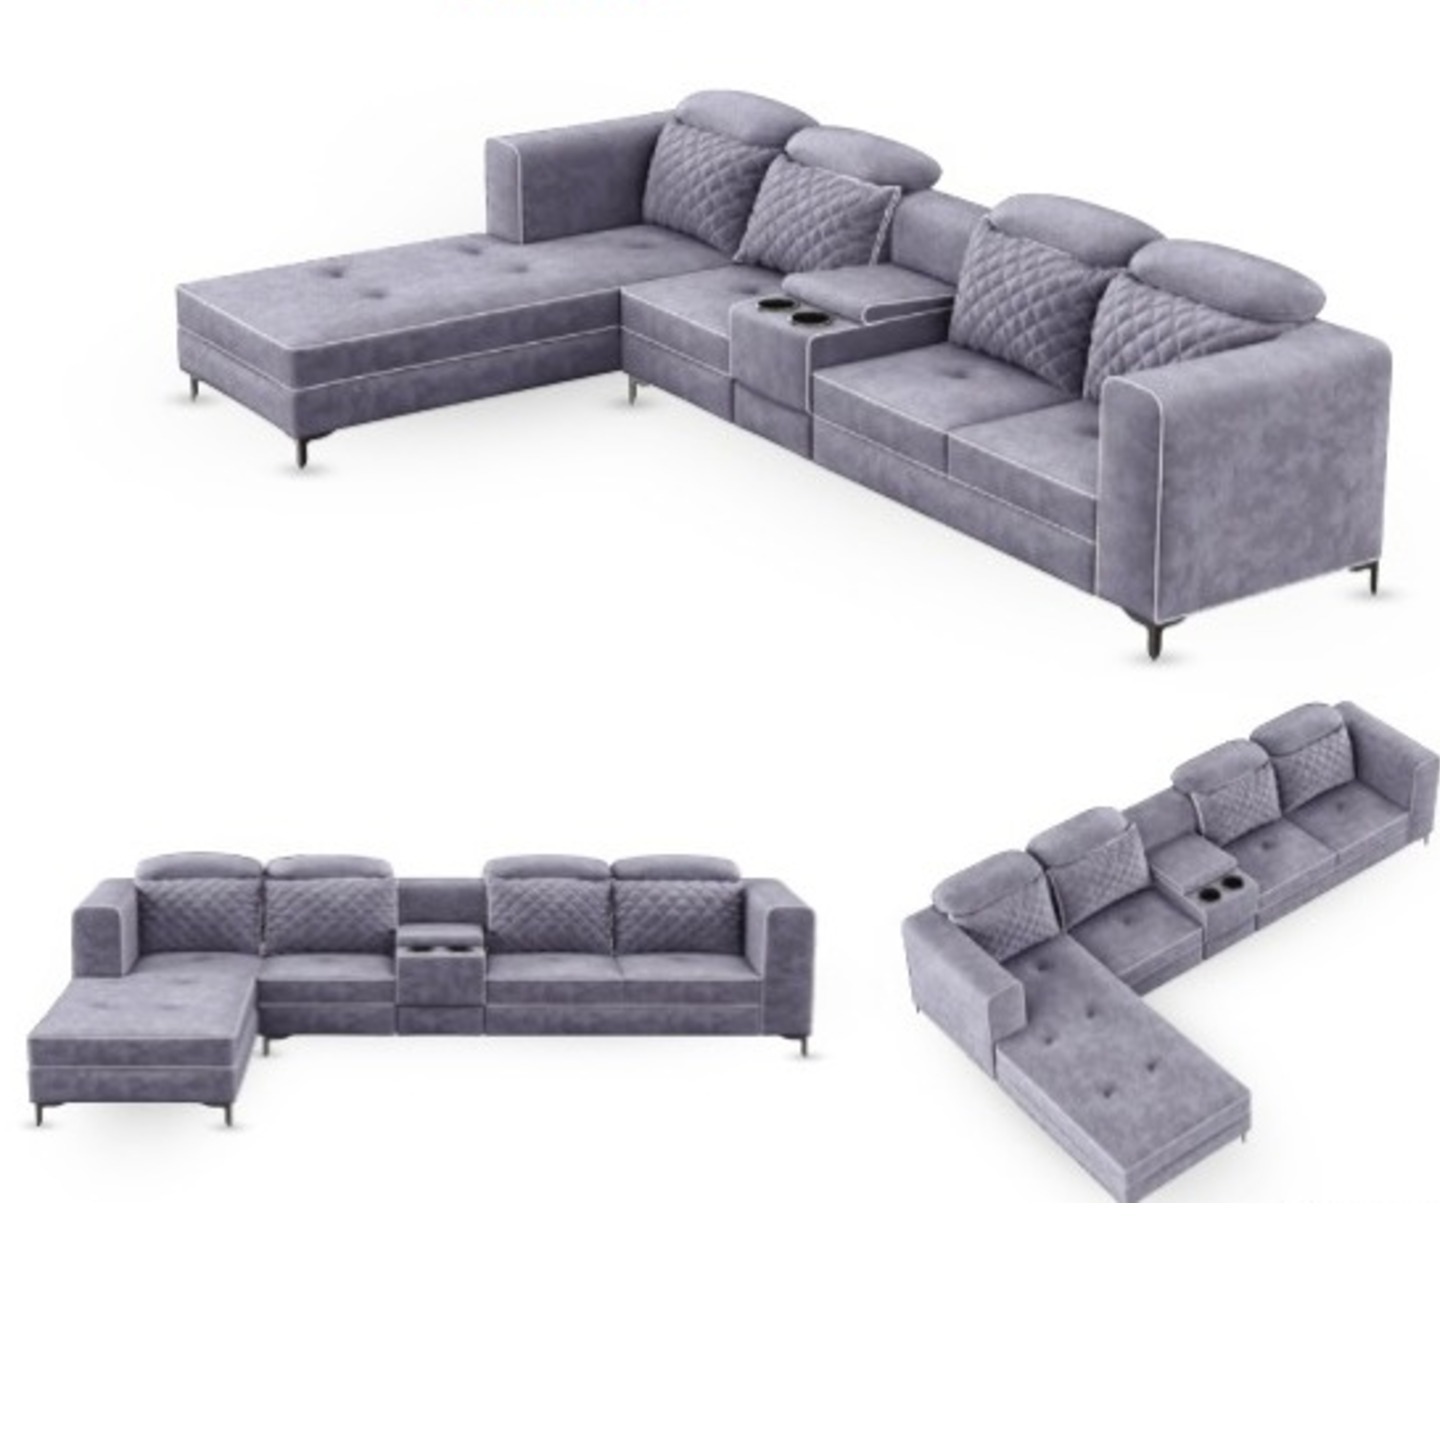 RLF Corner Sofa Set DD-503 Lounger In Grey Colour